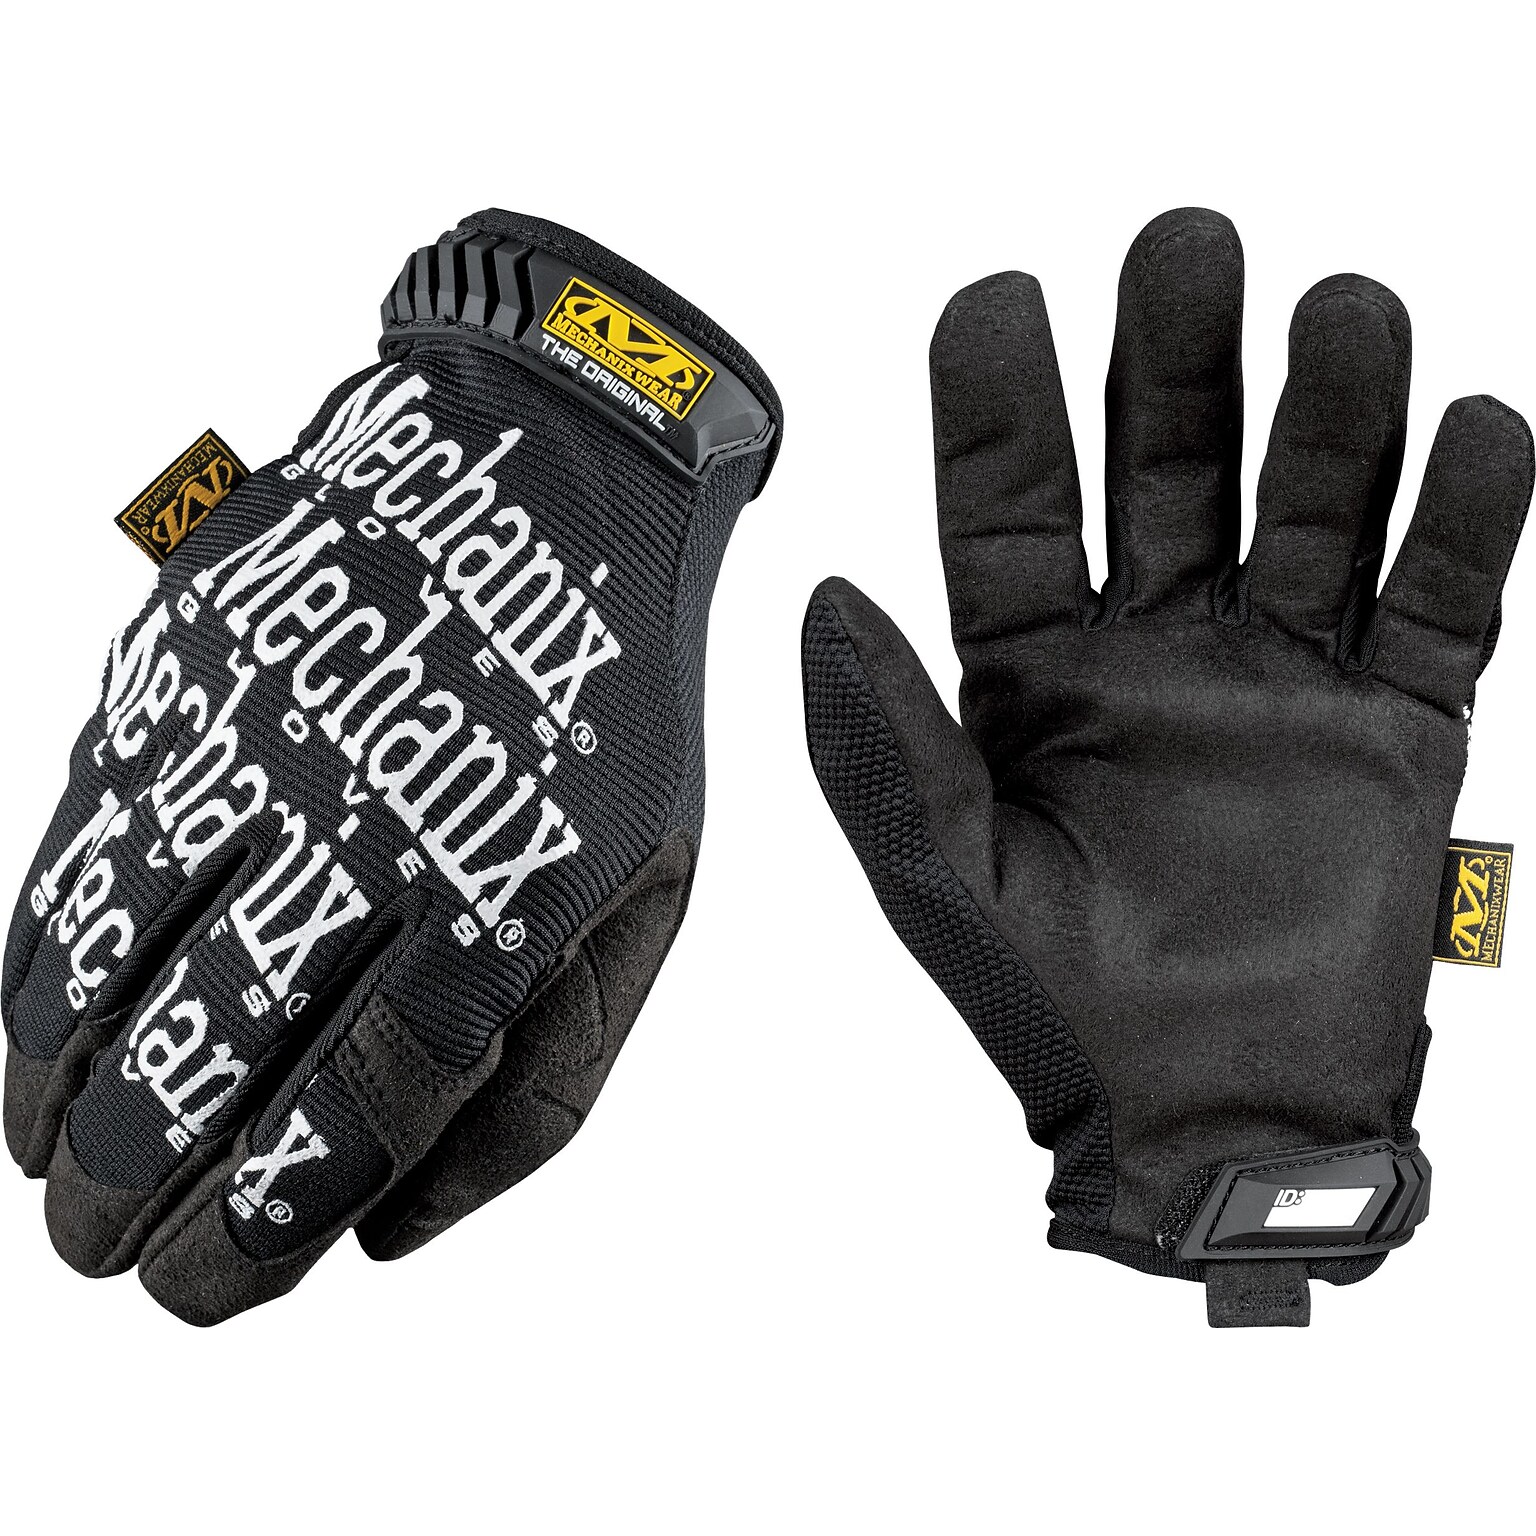 Mechanix Wear Original High Dexterity Gloves, Spandex/Synthetic, Hook & Loop Cuff, Medium, Black (MG-05-009)